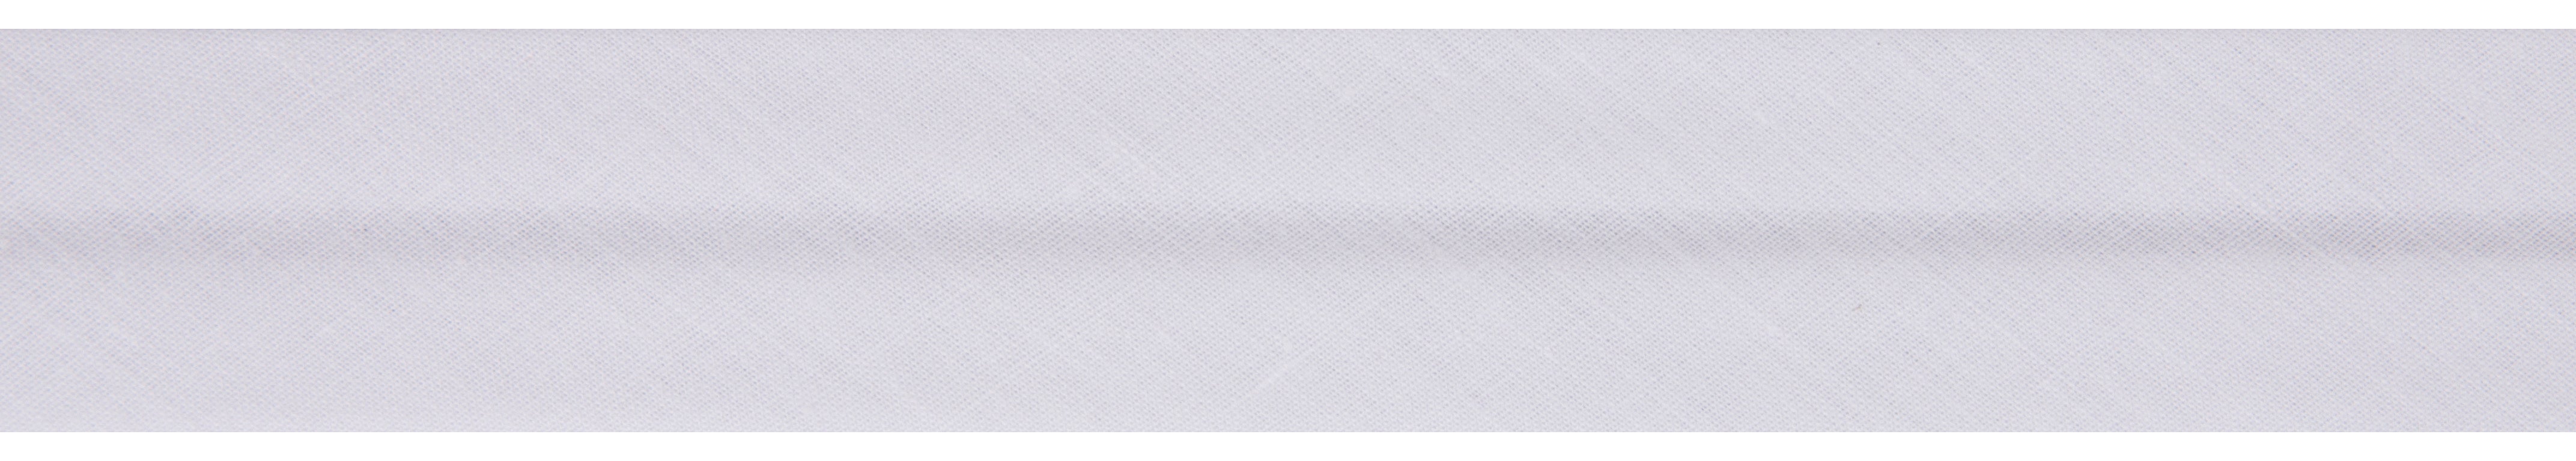 White Bias Binding | Narrow from Jaycotts Sewing Supplies